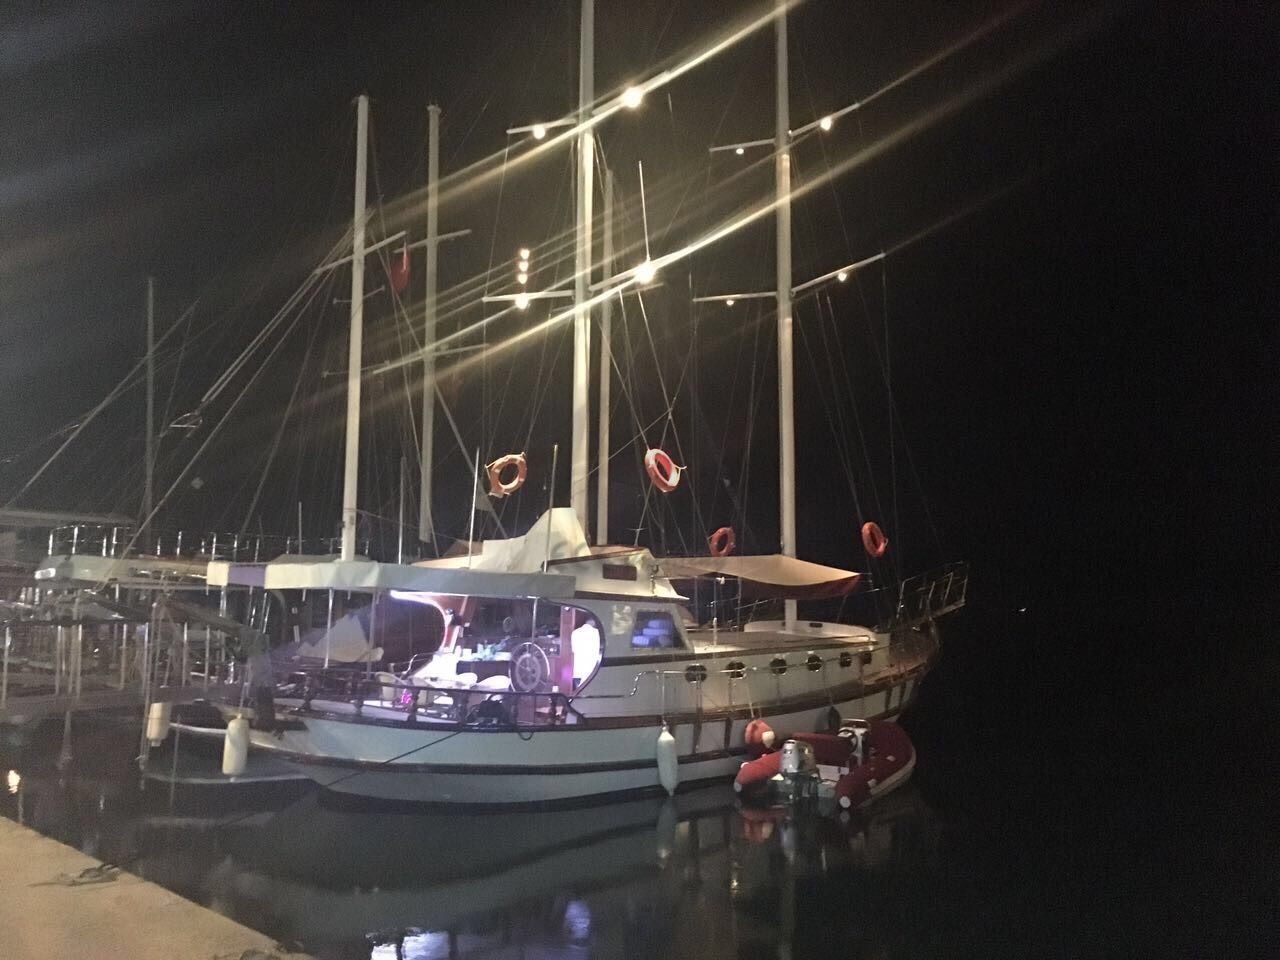 Manolya Gulet Yacht, At Night With Tender.